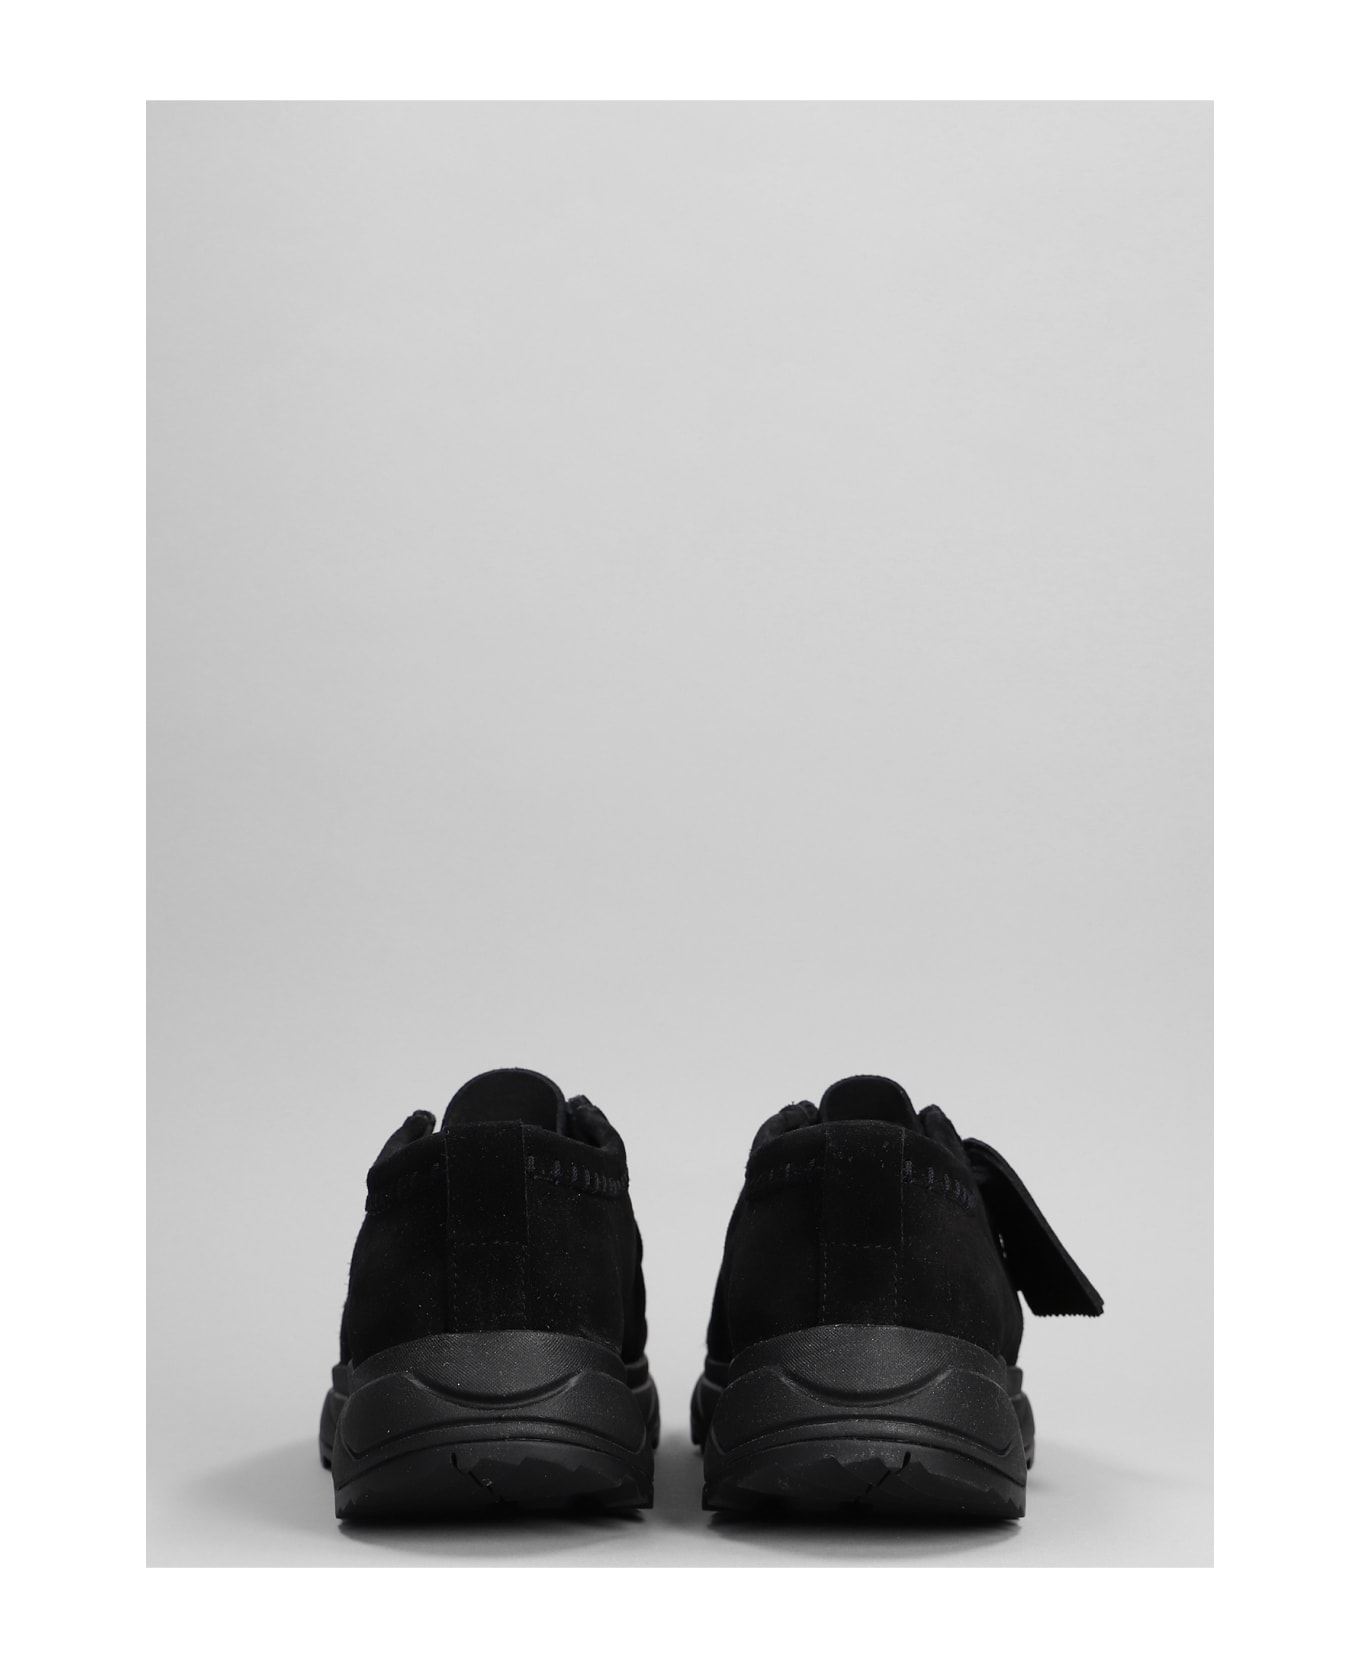 Clarks Walla Eden Lo Lace Up Shoes In Black Suede - black